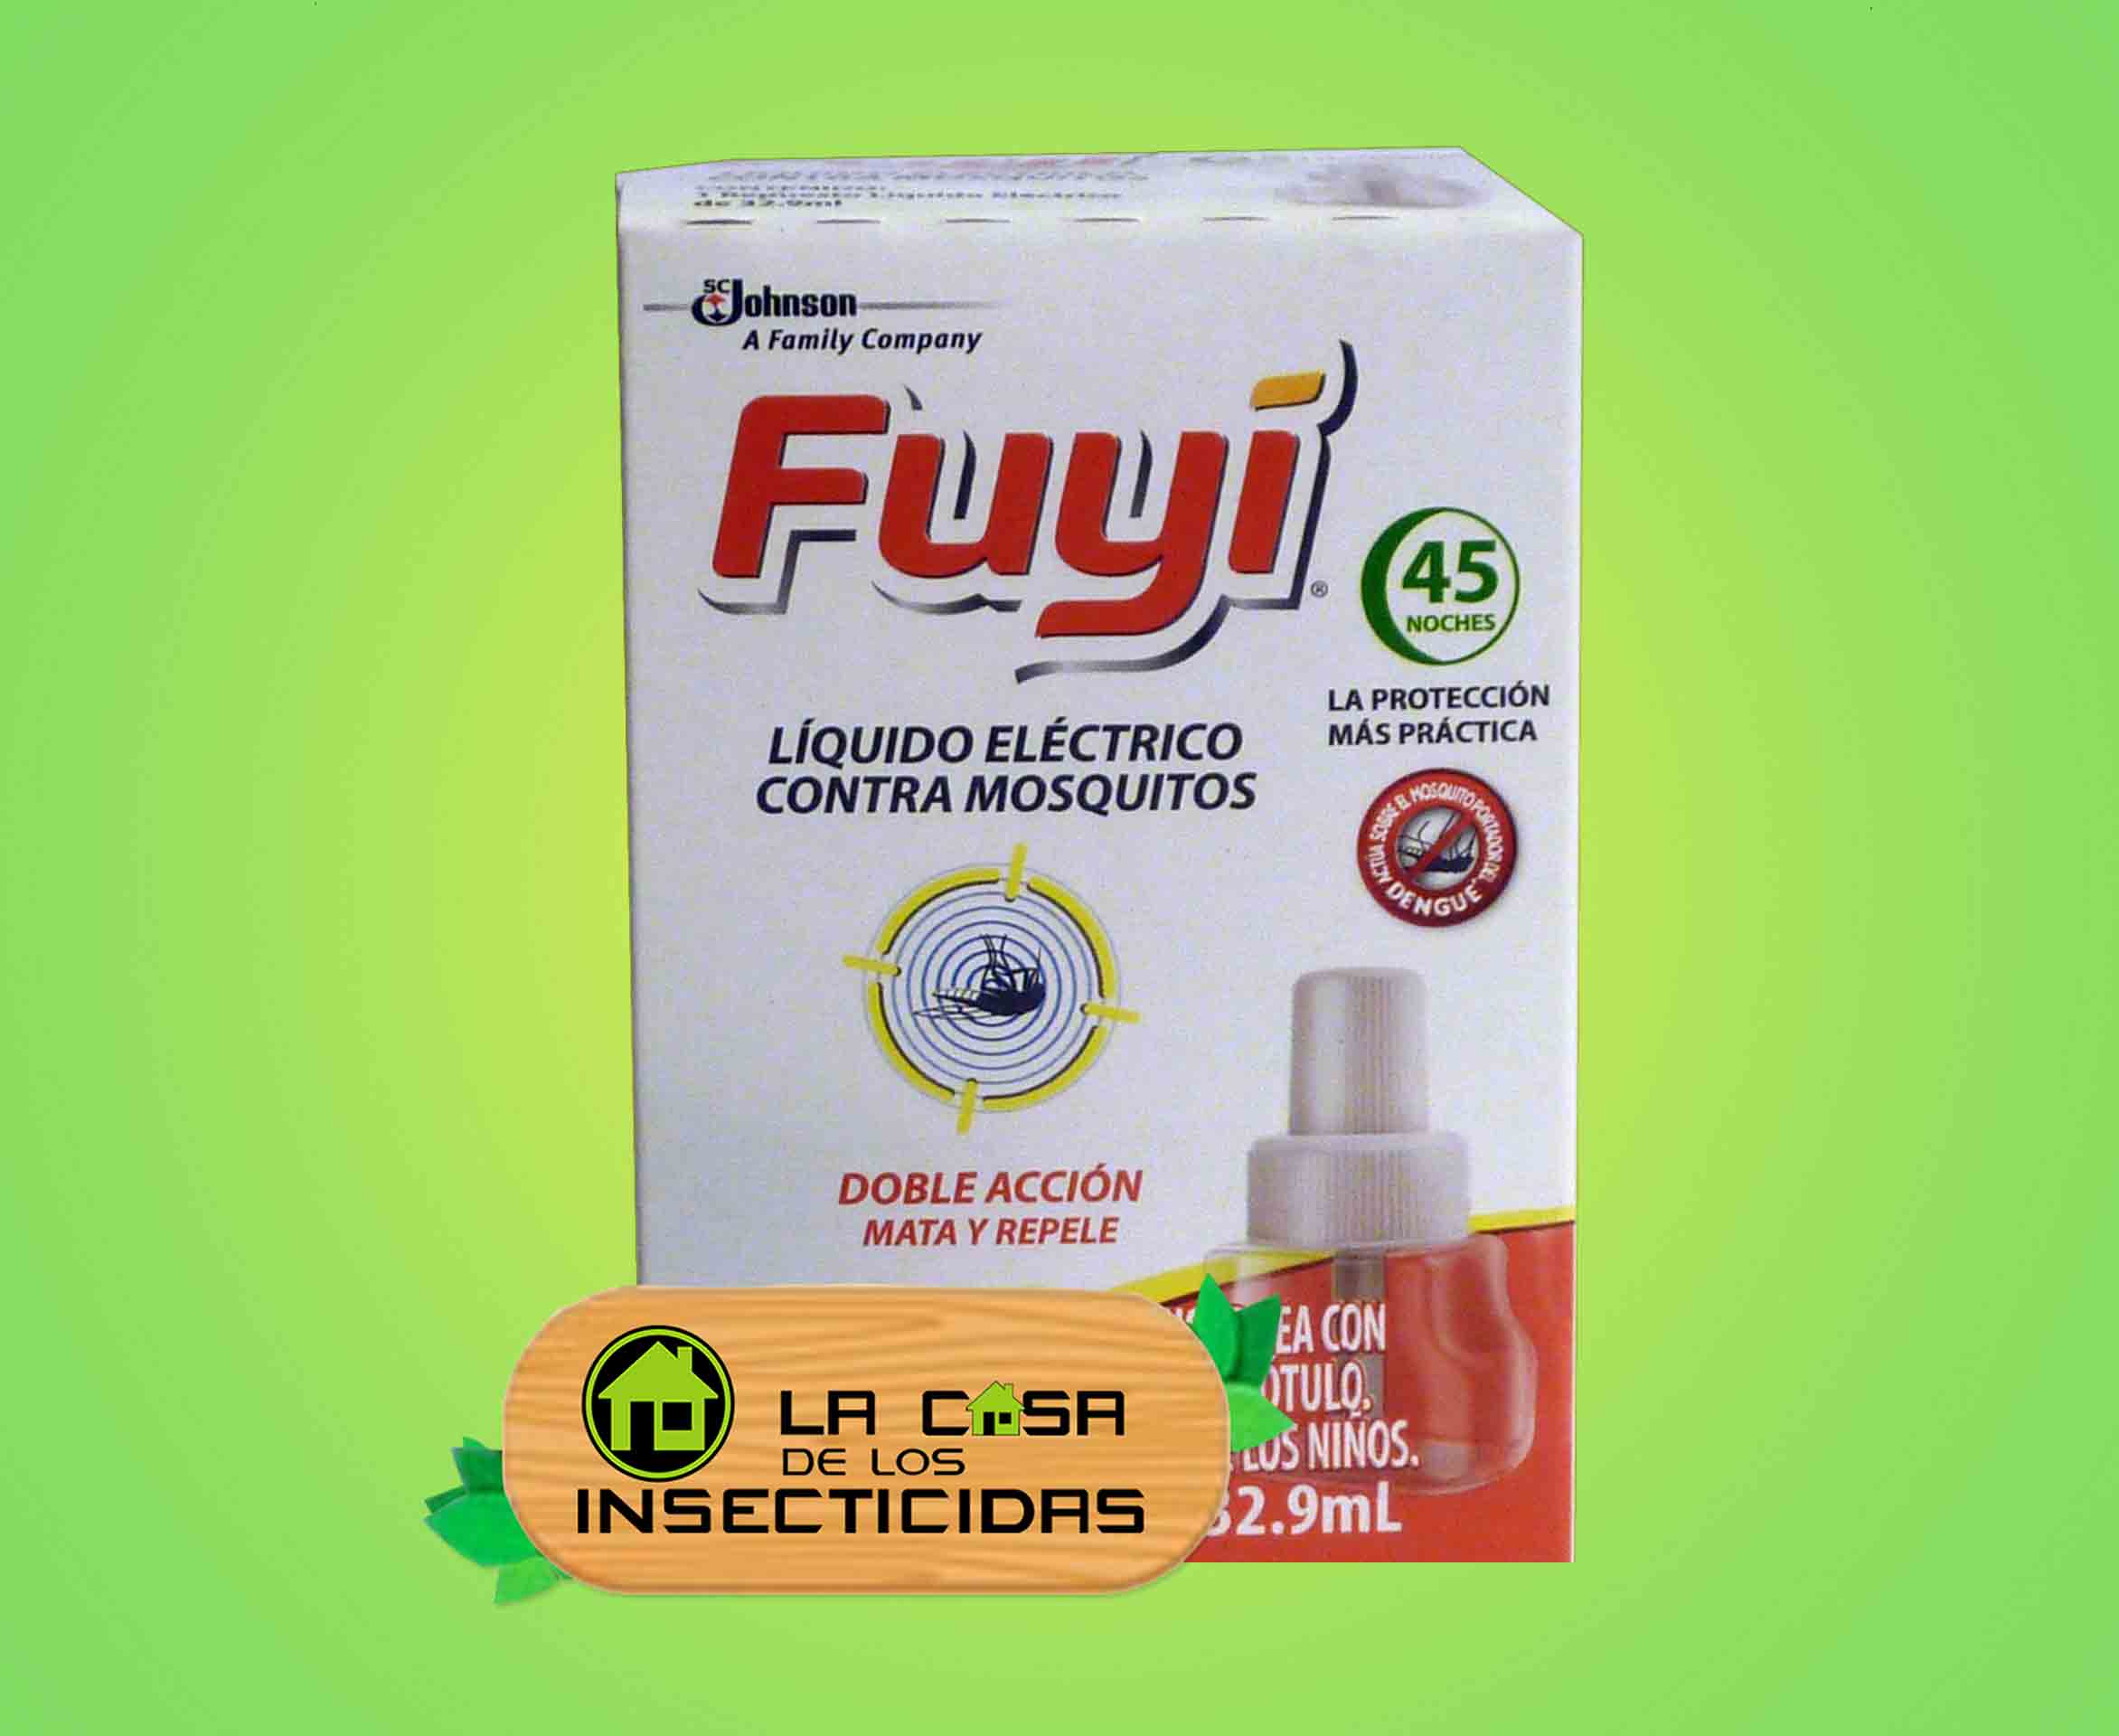 Fuyi 45 noches aparato enchufable + líquido Repelente mosquitos